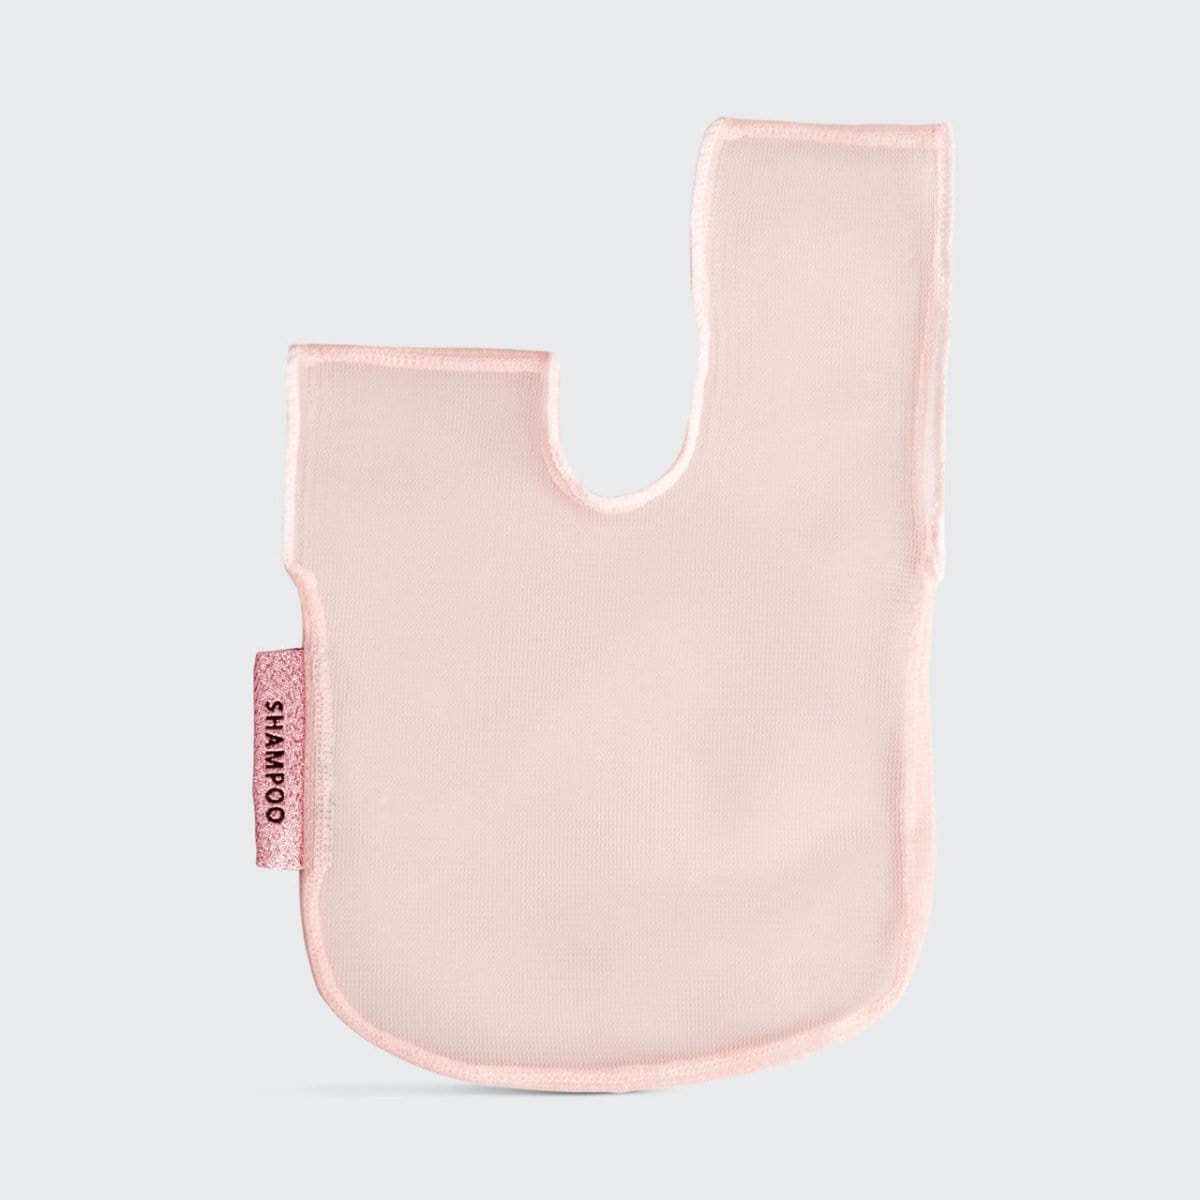 Autosmart Retail Bag - Bag only $39.99